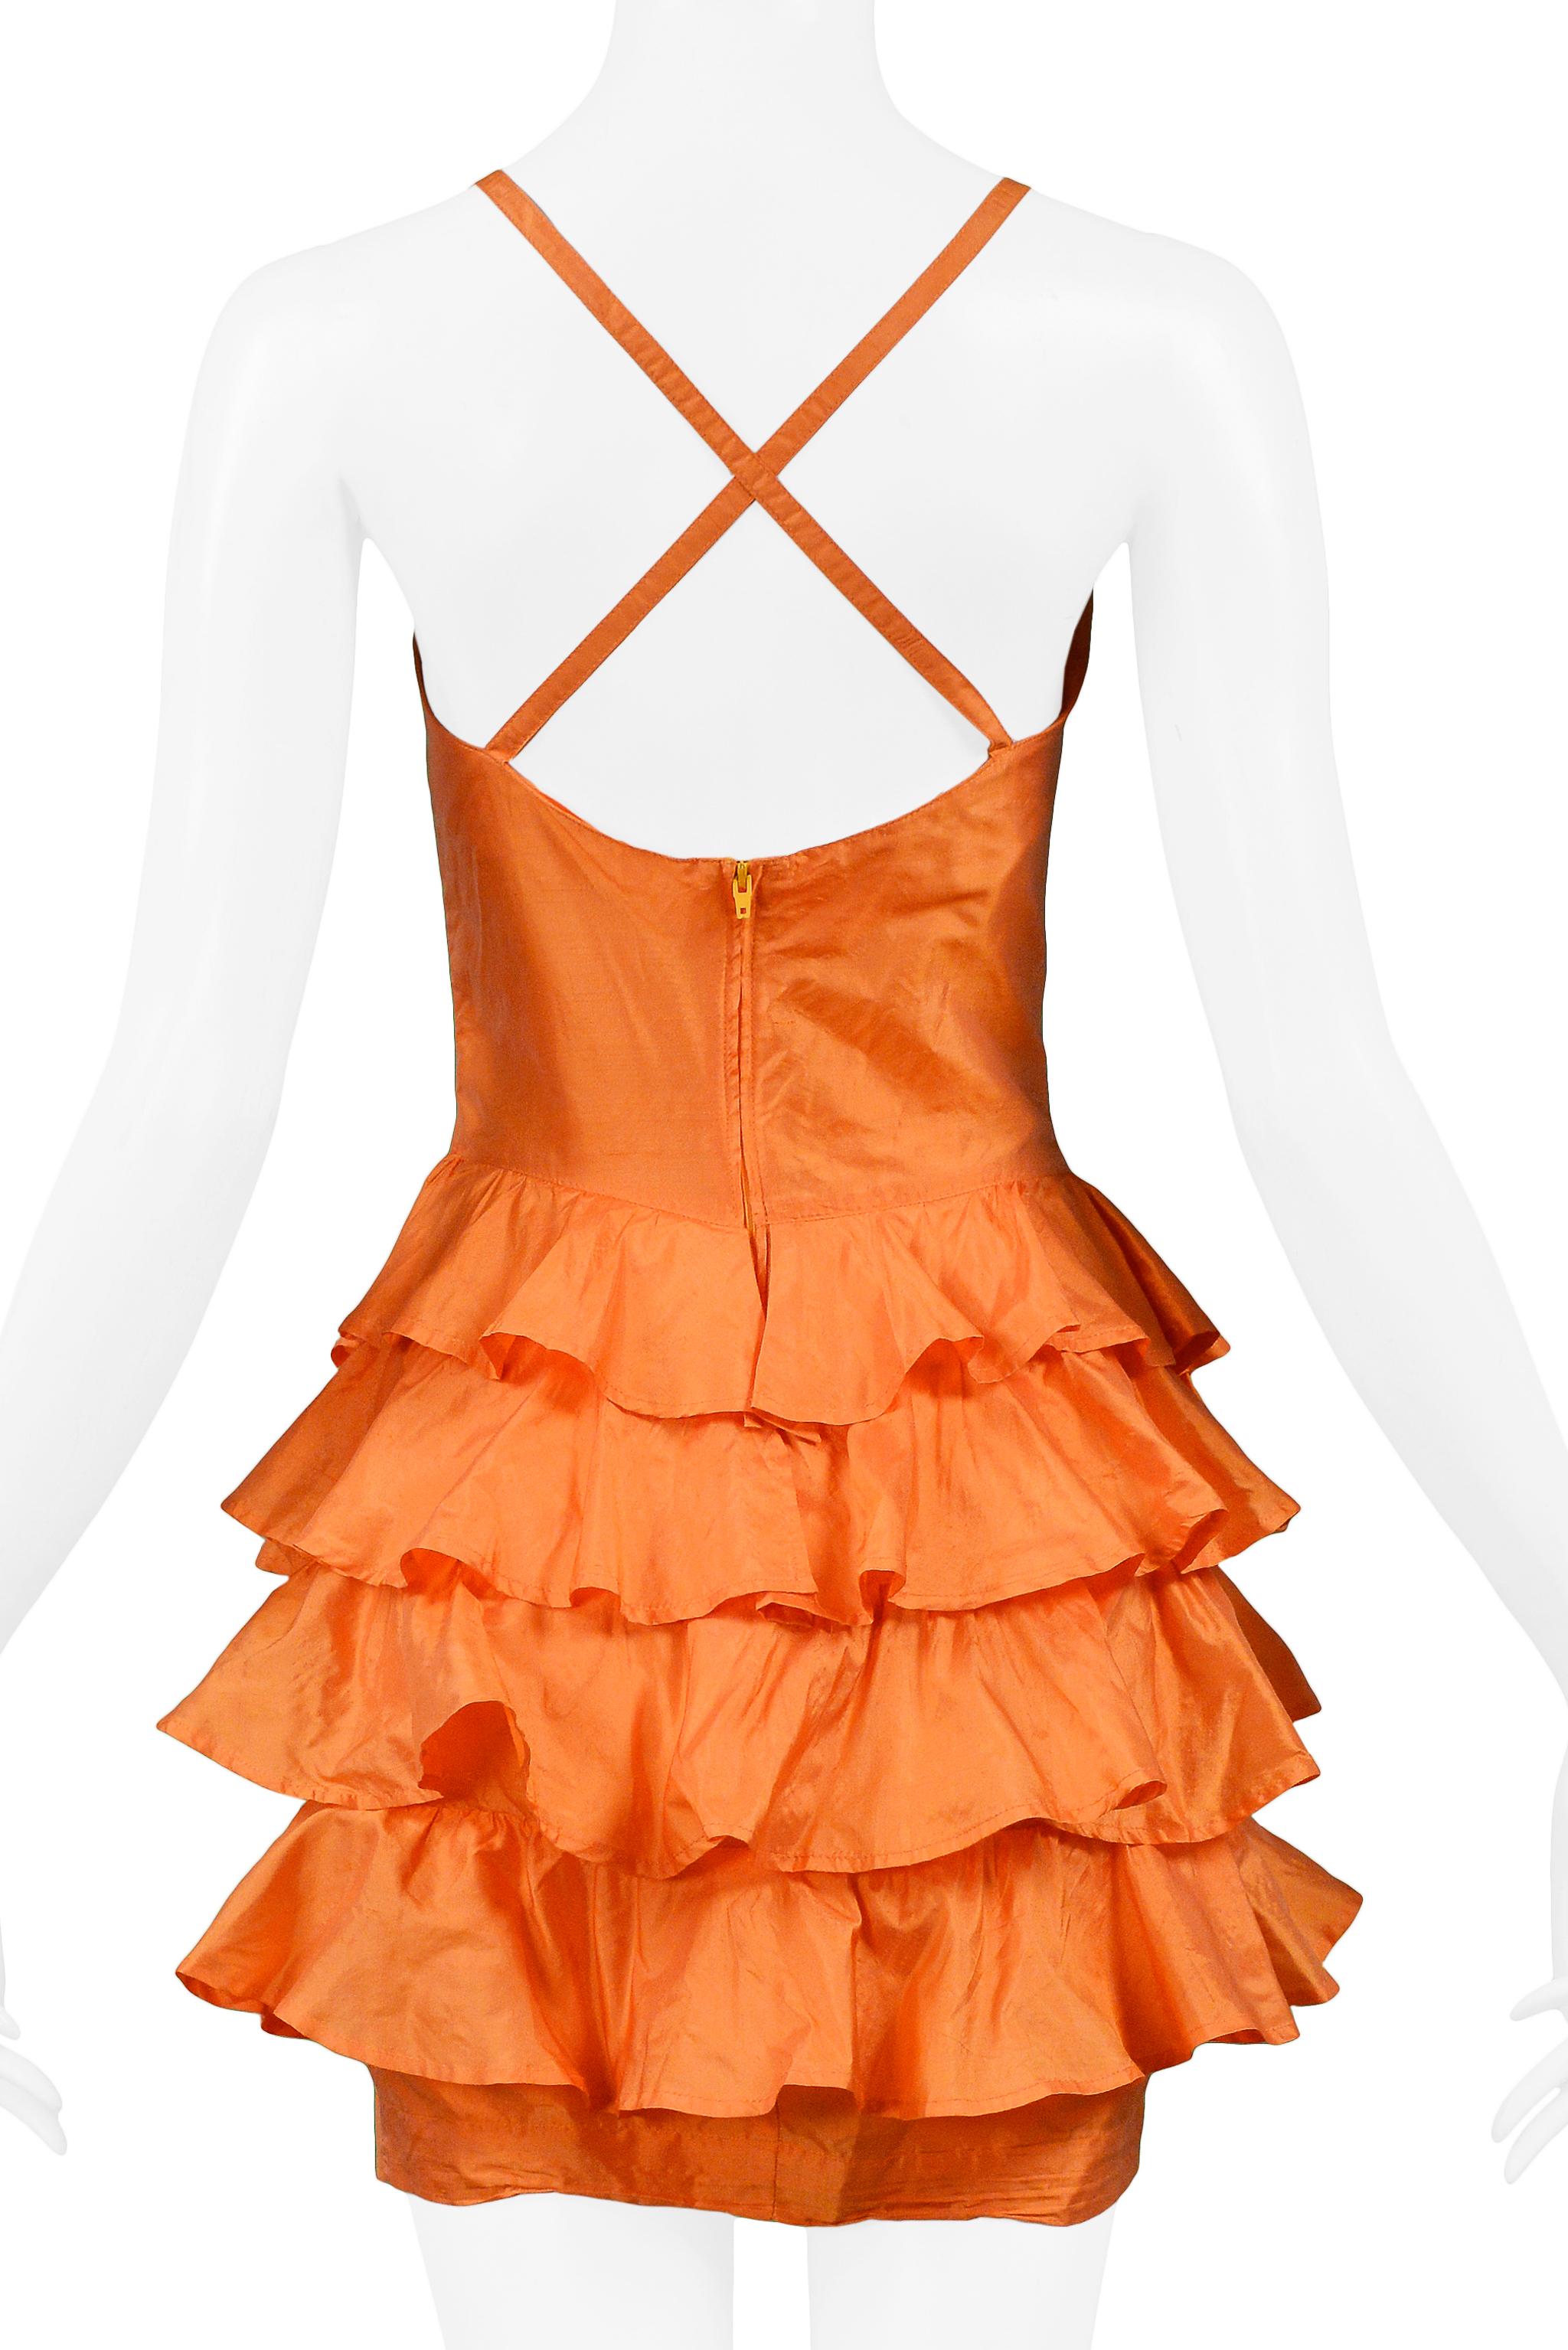 Byblos Orange Silk Ruffle Dress 1992 For Sale 1